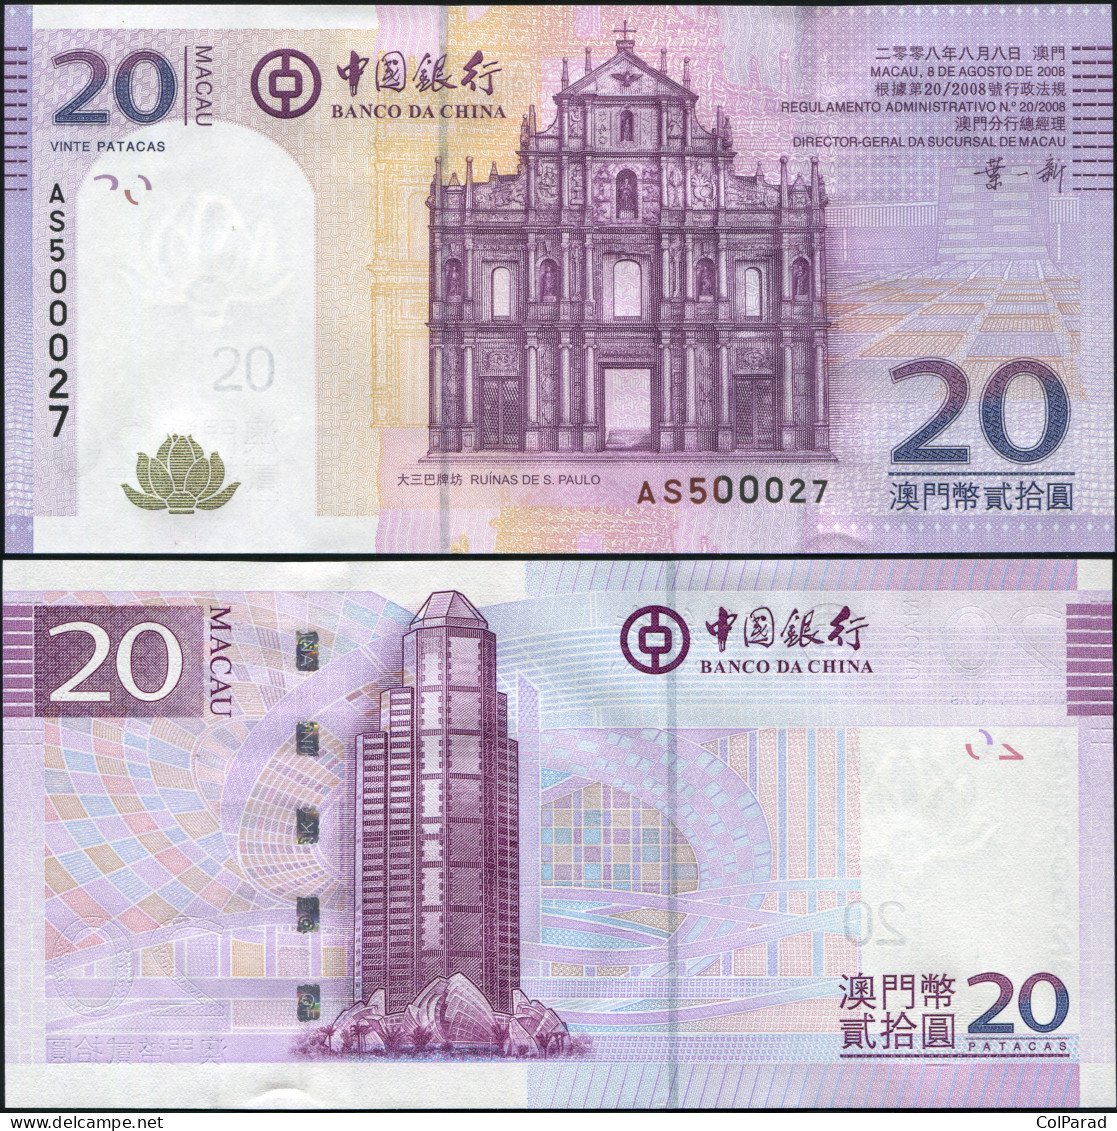 MACAO 20 PATACAS - 08.08.2008 (2009) - Paper Unc - P.109a Banknote - Macau